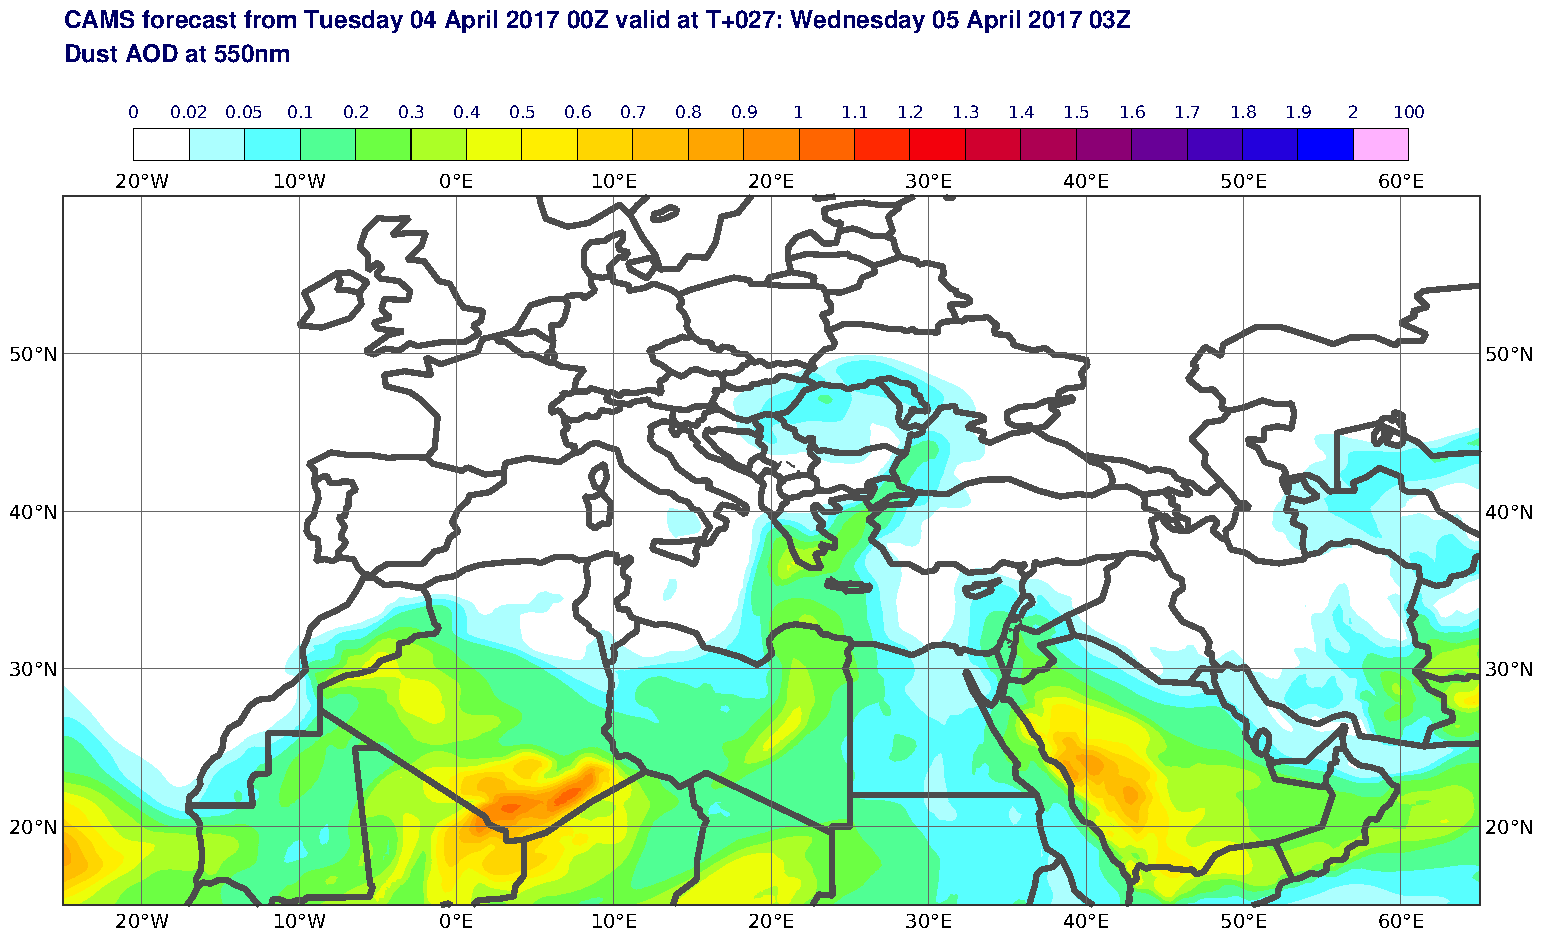 Dust AOD at 550nm valid at T27 - 2017-04-05 03:00